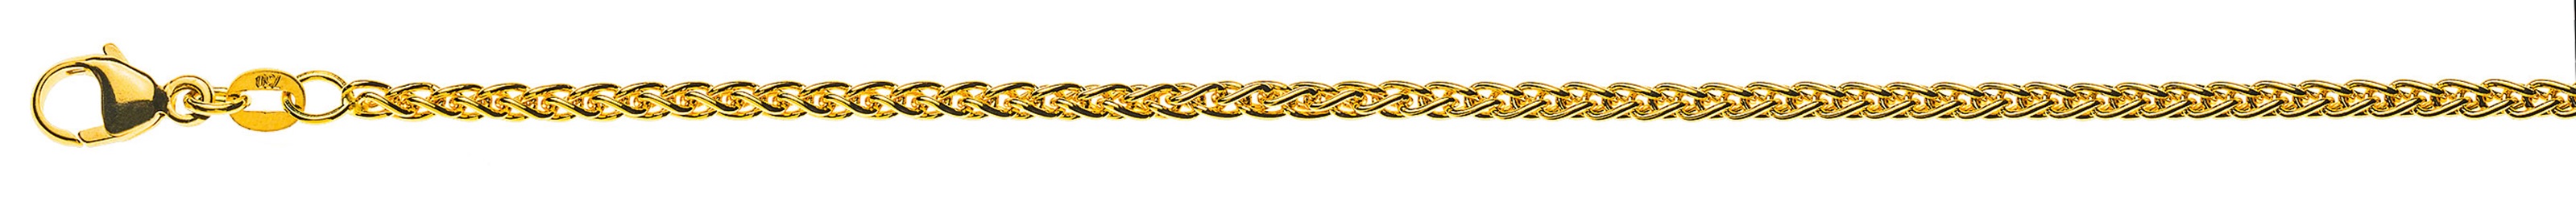 AURONOS Prestige Necklace yellow gold 18K cable chain 55cm 2.5mm